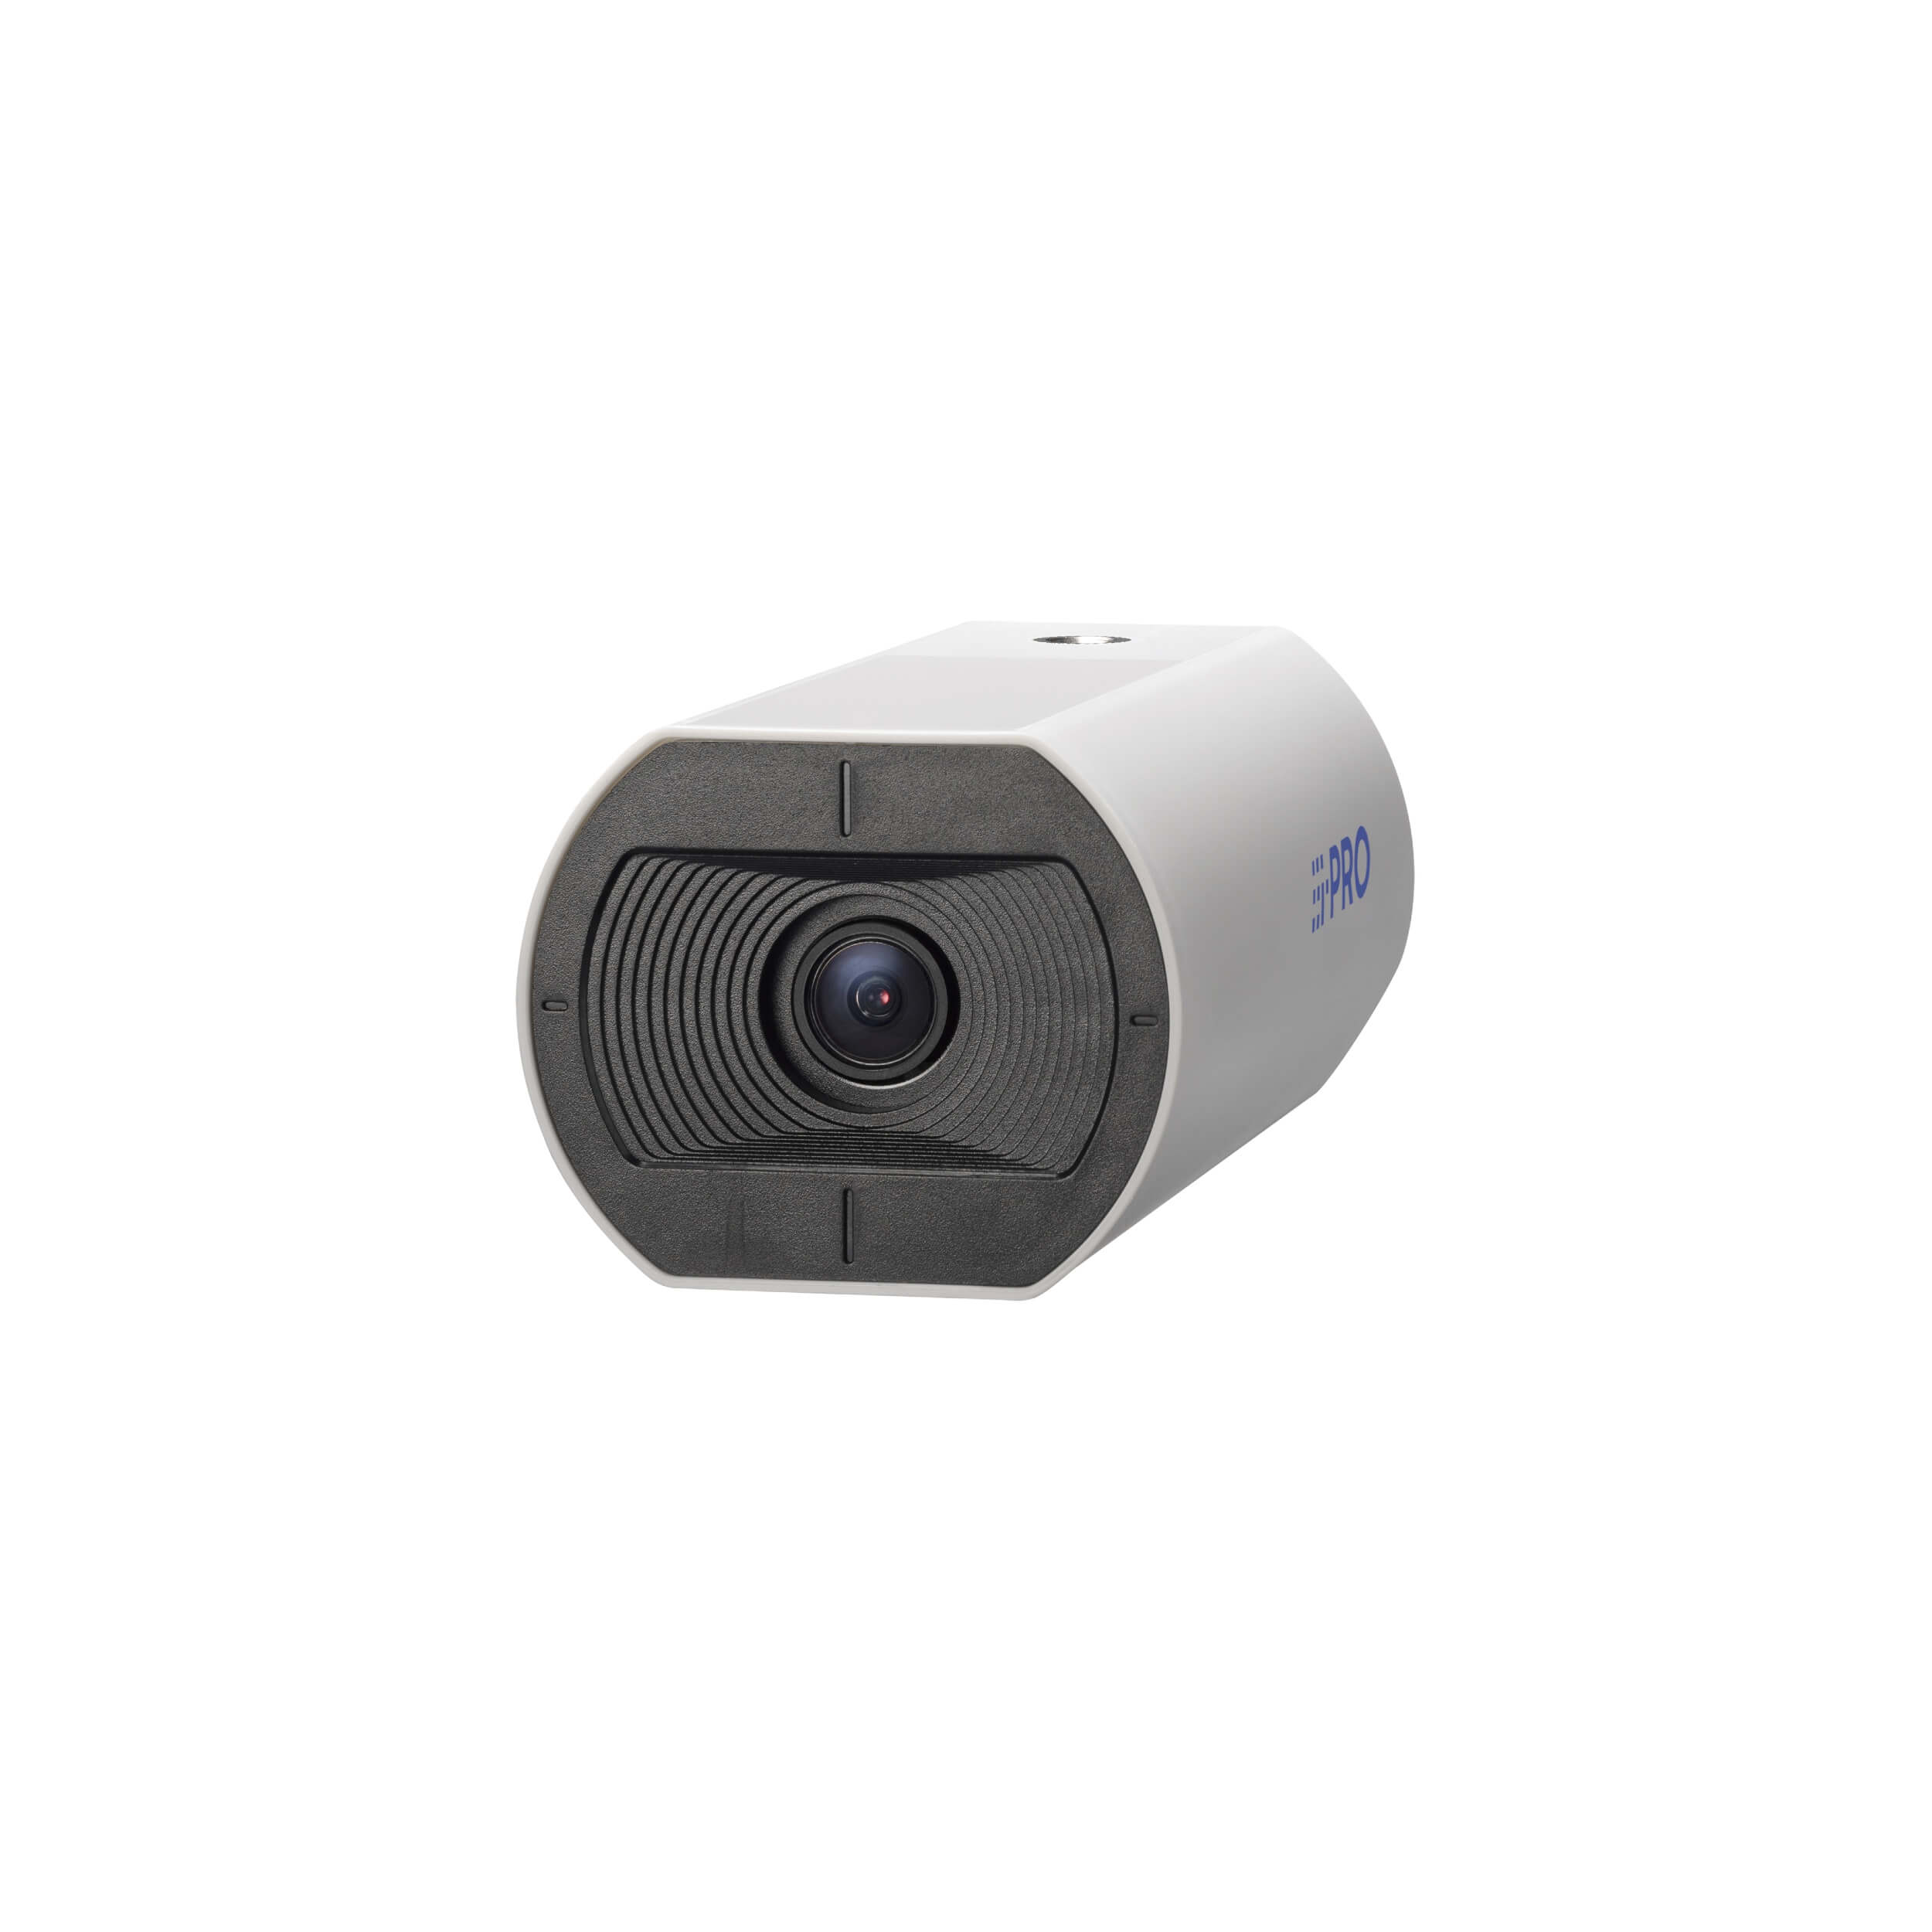 Panasonic WV-U1142A 4 Megapixel Network Indoor Box Camera with 2.9mm Lens